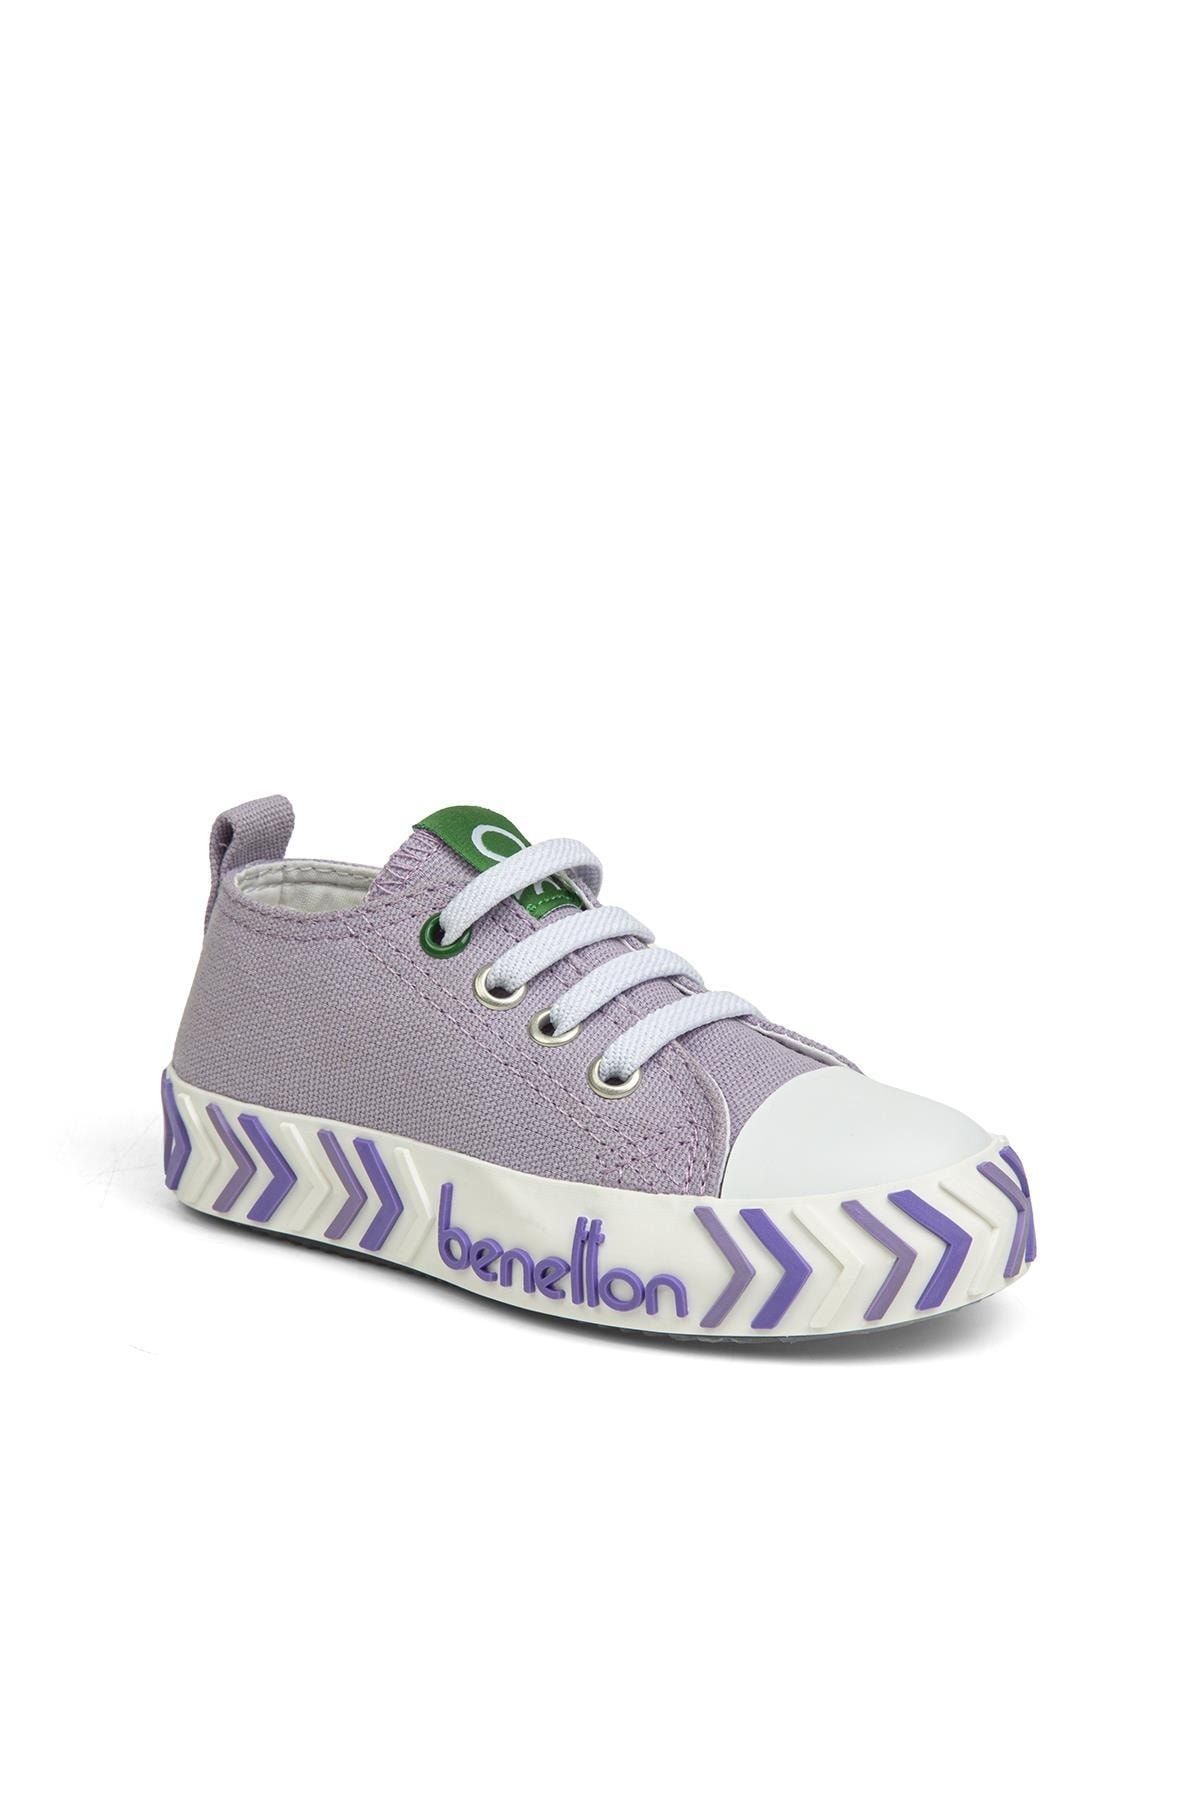 Benetton ® | Bn-30640 - 3394 Lilac Kids کفش ورزشیs